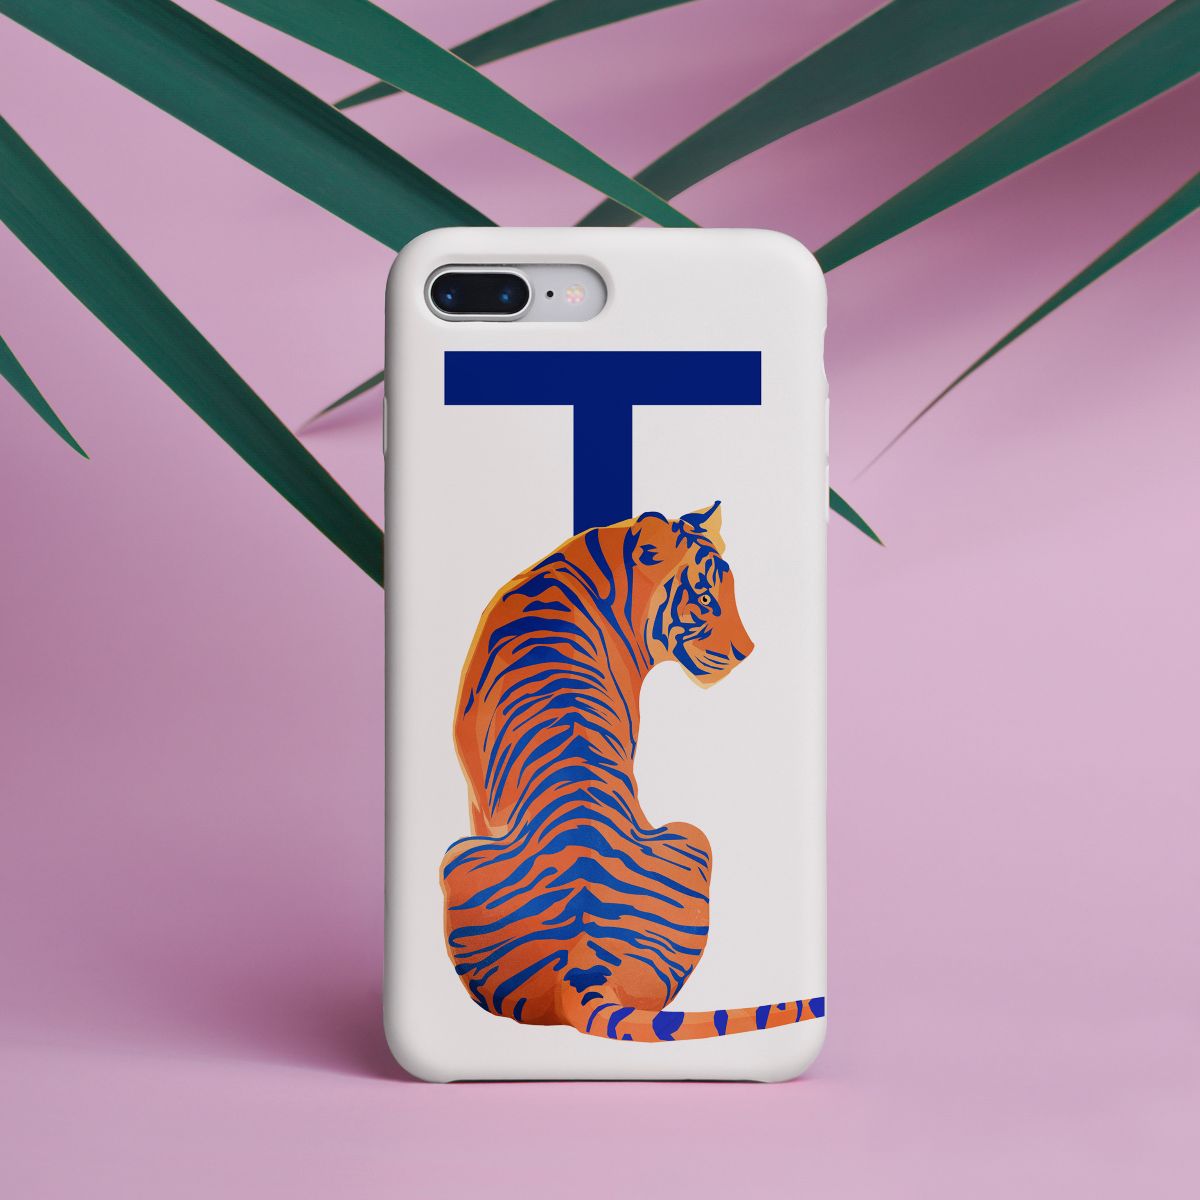 Goed Blauw: Alphabet T for Tiger - phone case